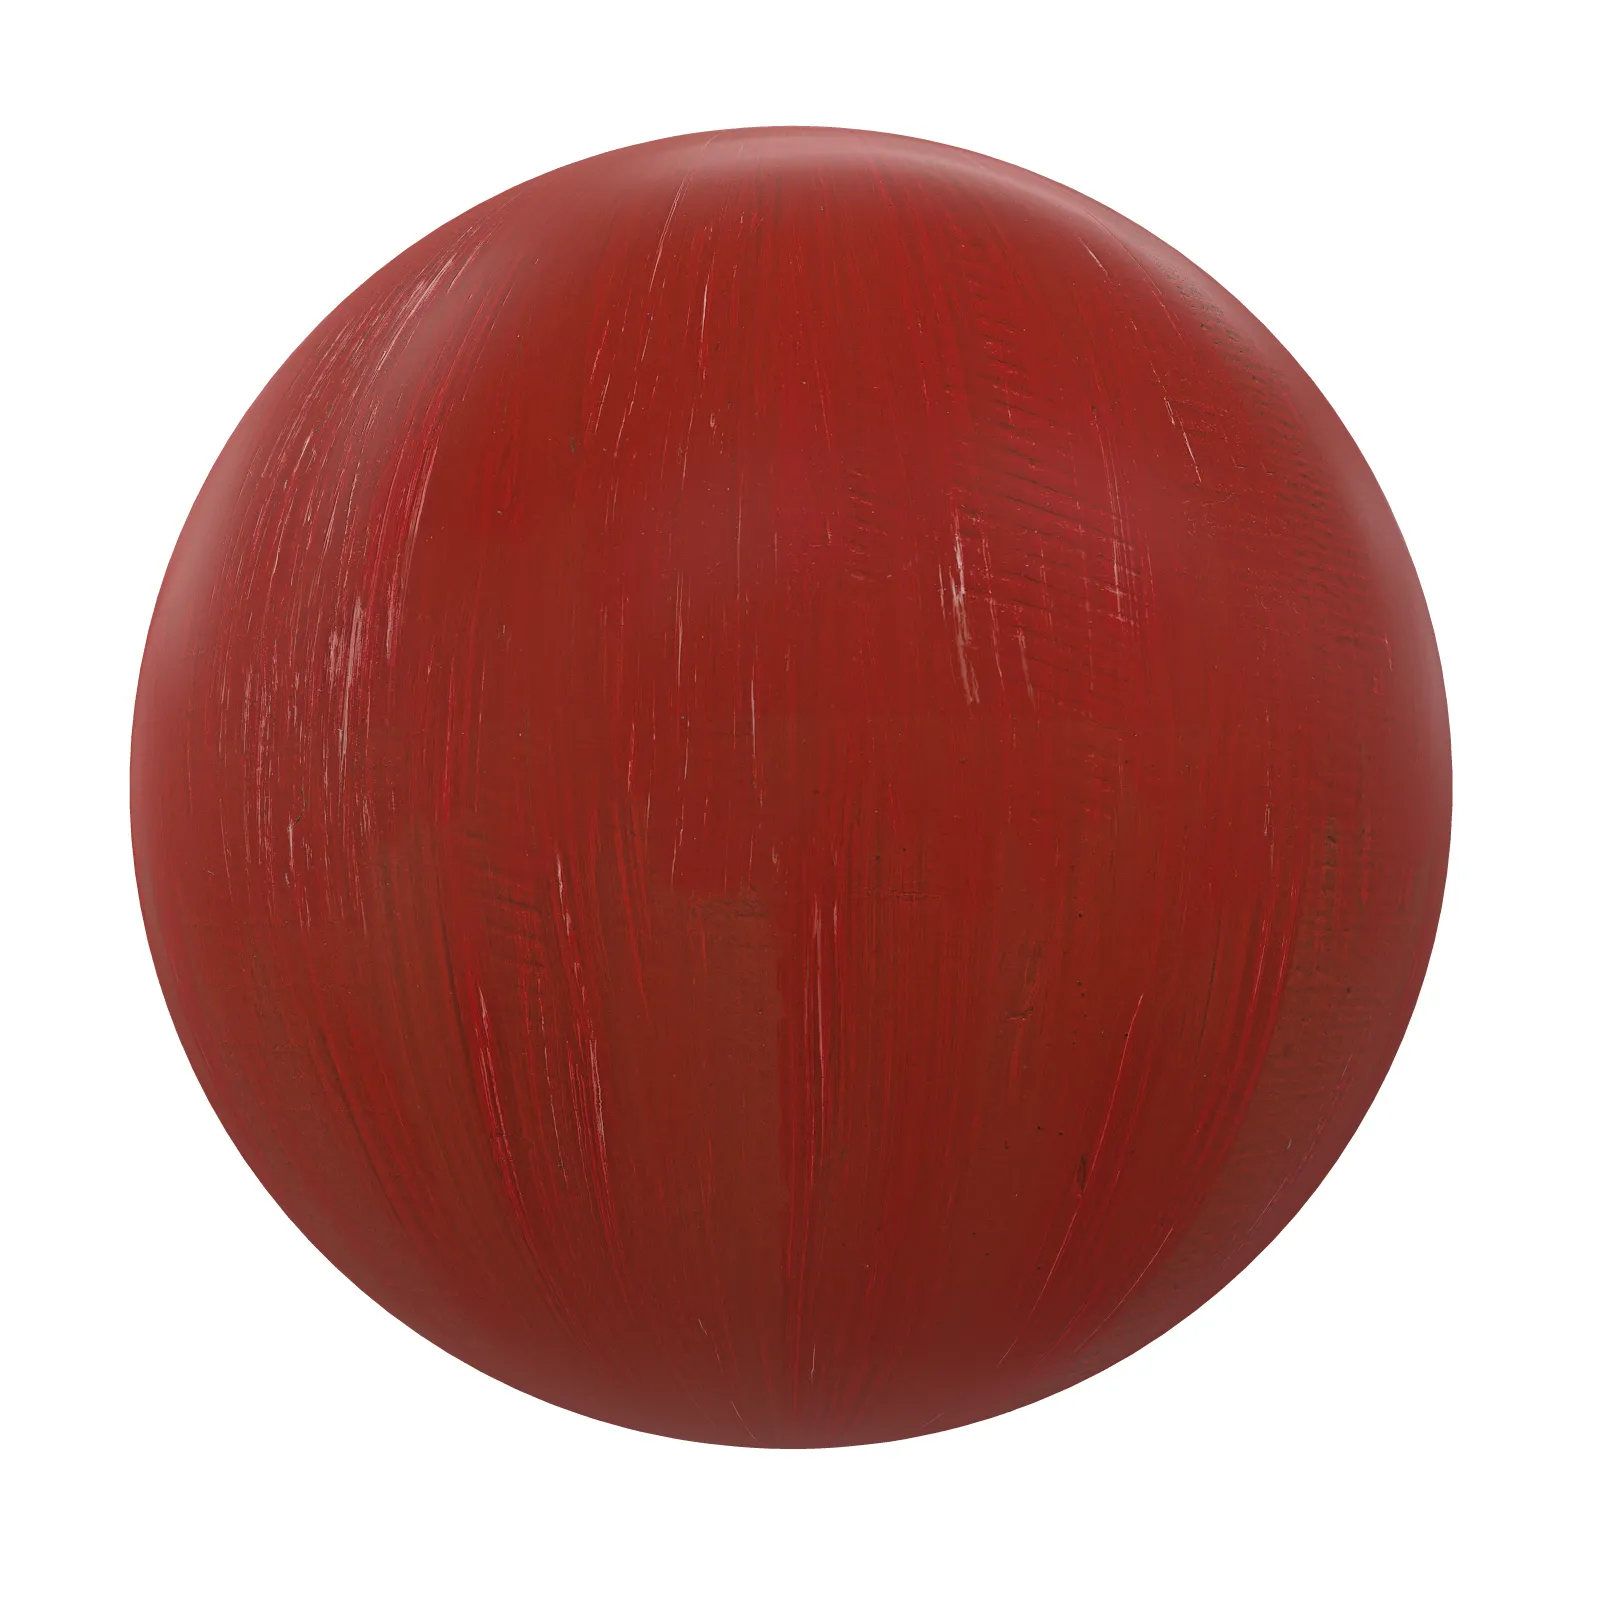 3ds Max Files – Texture – 8 – Wood Texture – 133 – Wood Texture by Minh Nguyen.